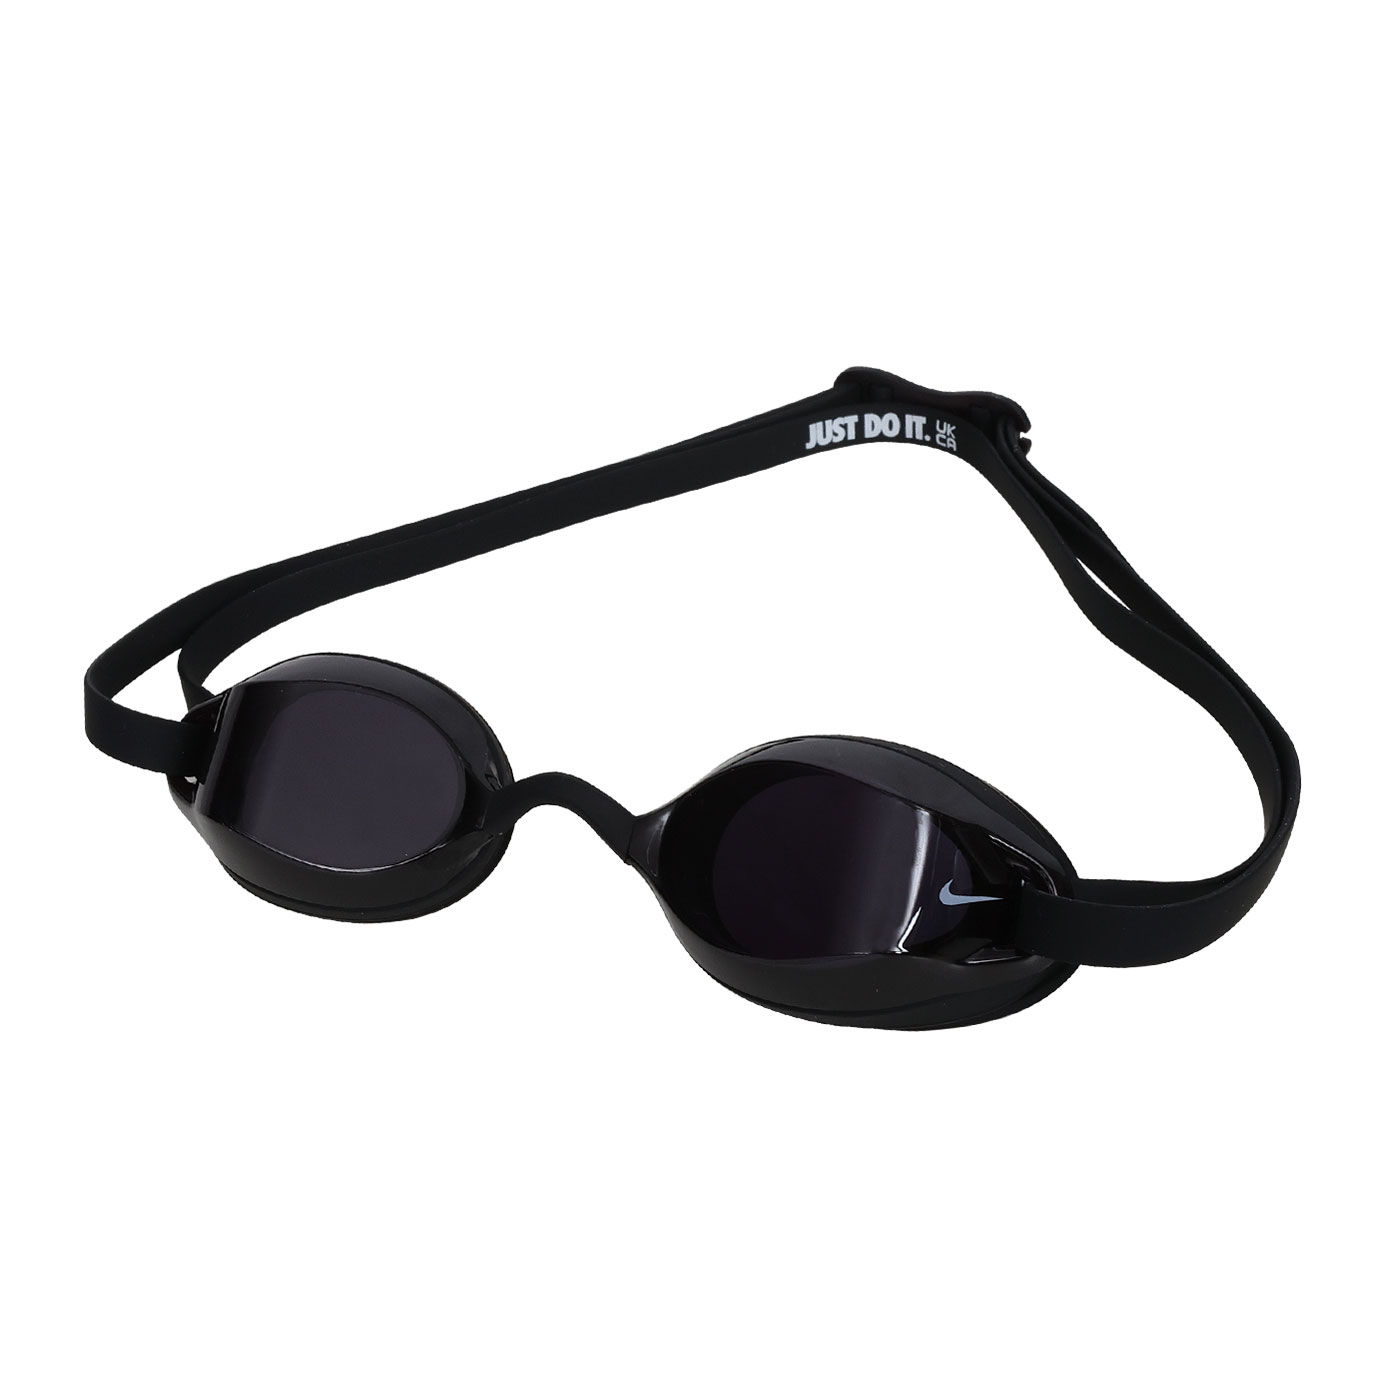 NIKE LEGACY 專業型泳鏡  NESSD131-014 - 黑白